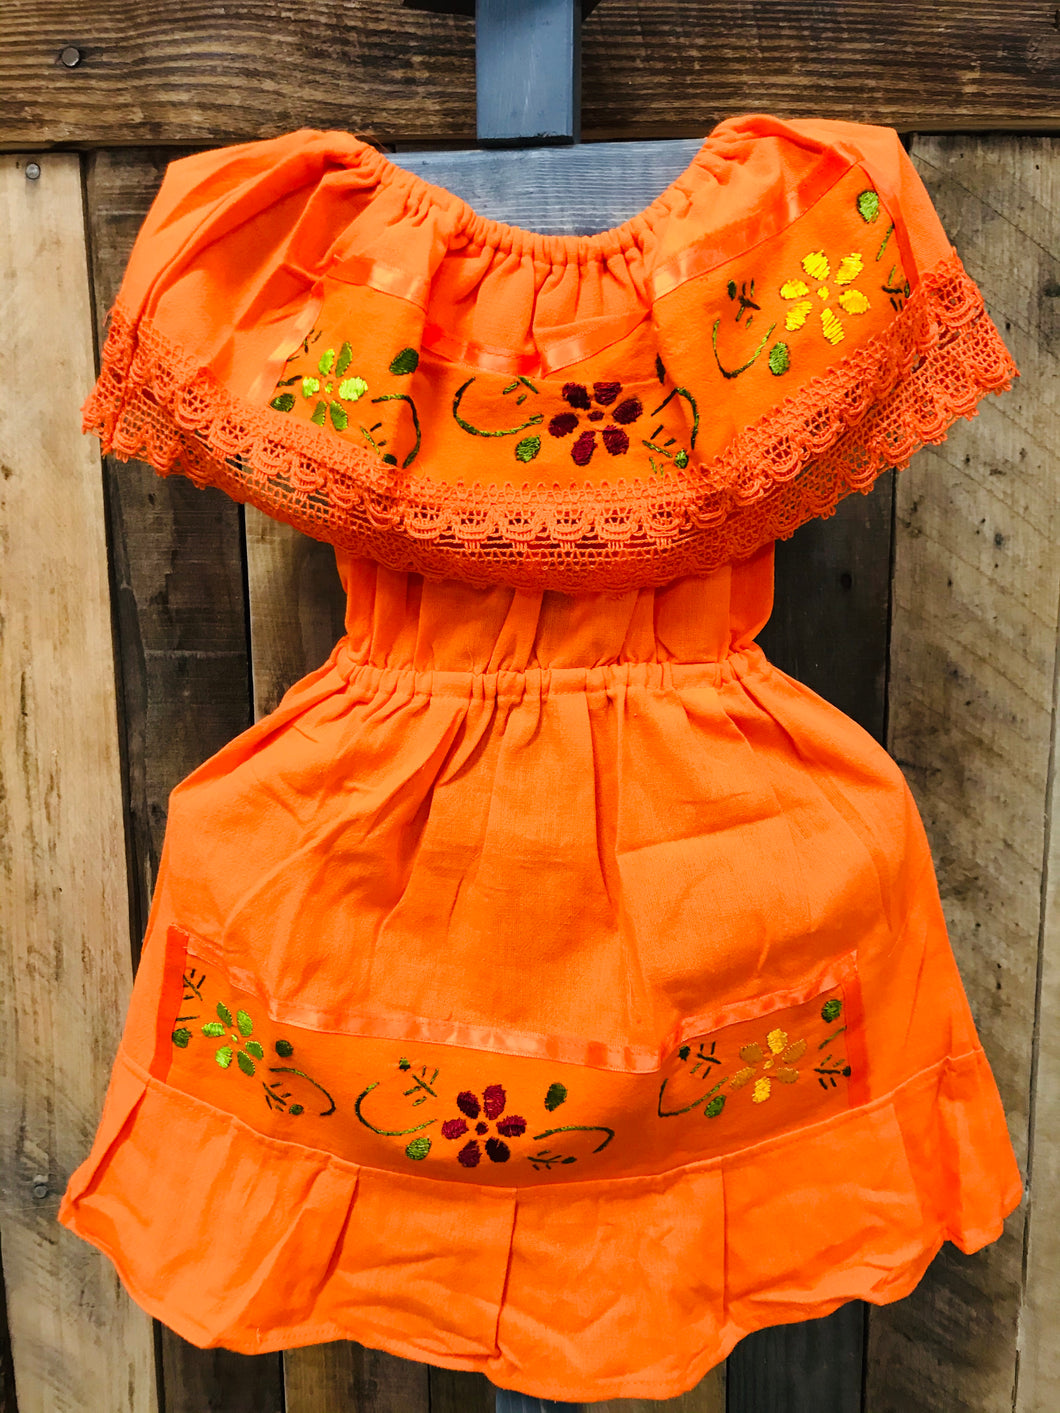 Vestido Campesino Nina/ Campesino Children Dress – Guelaguetza Designs